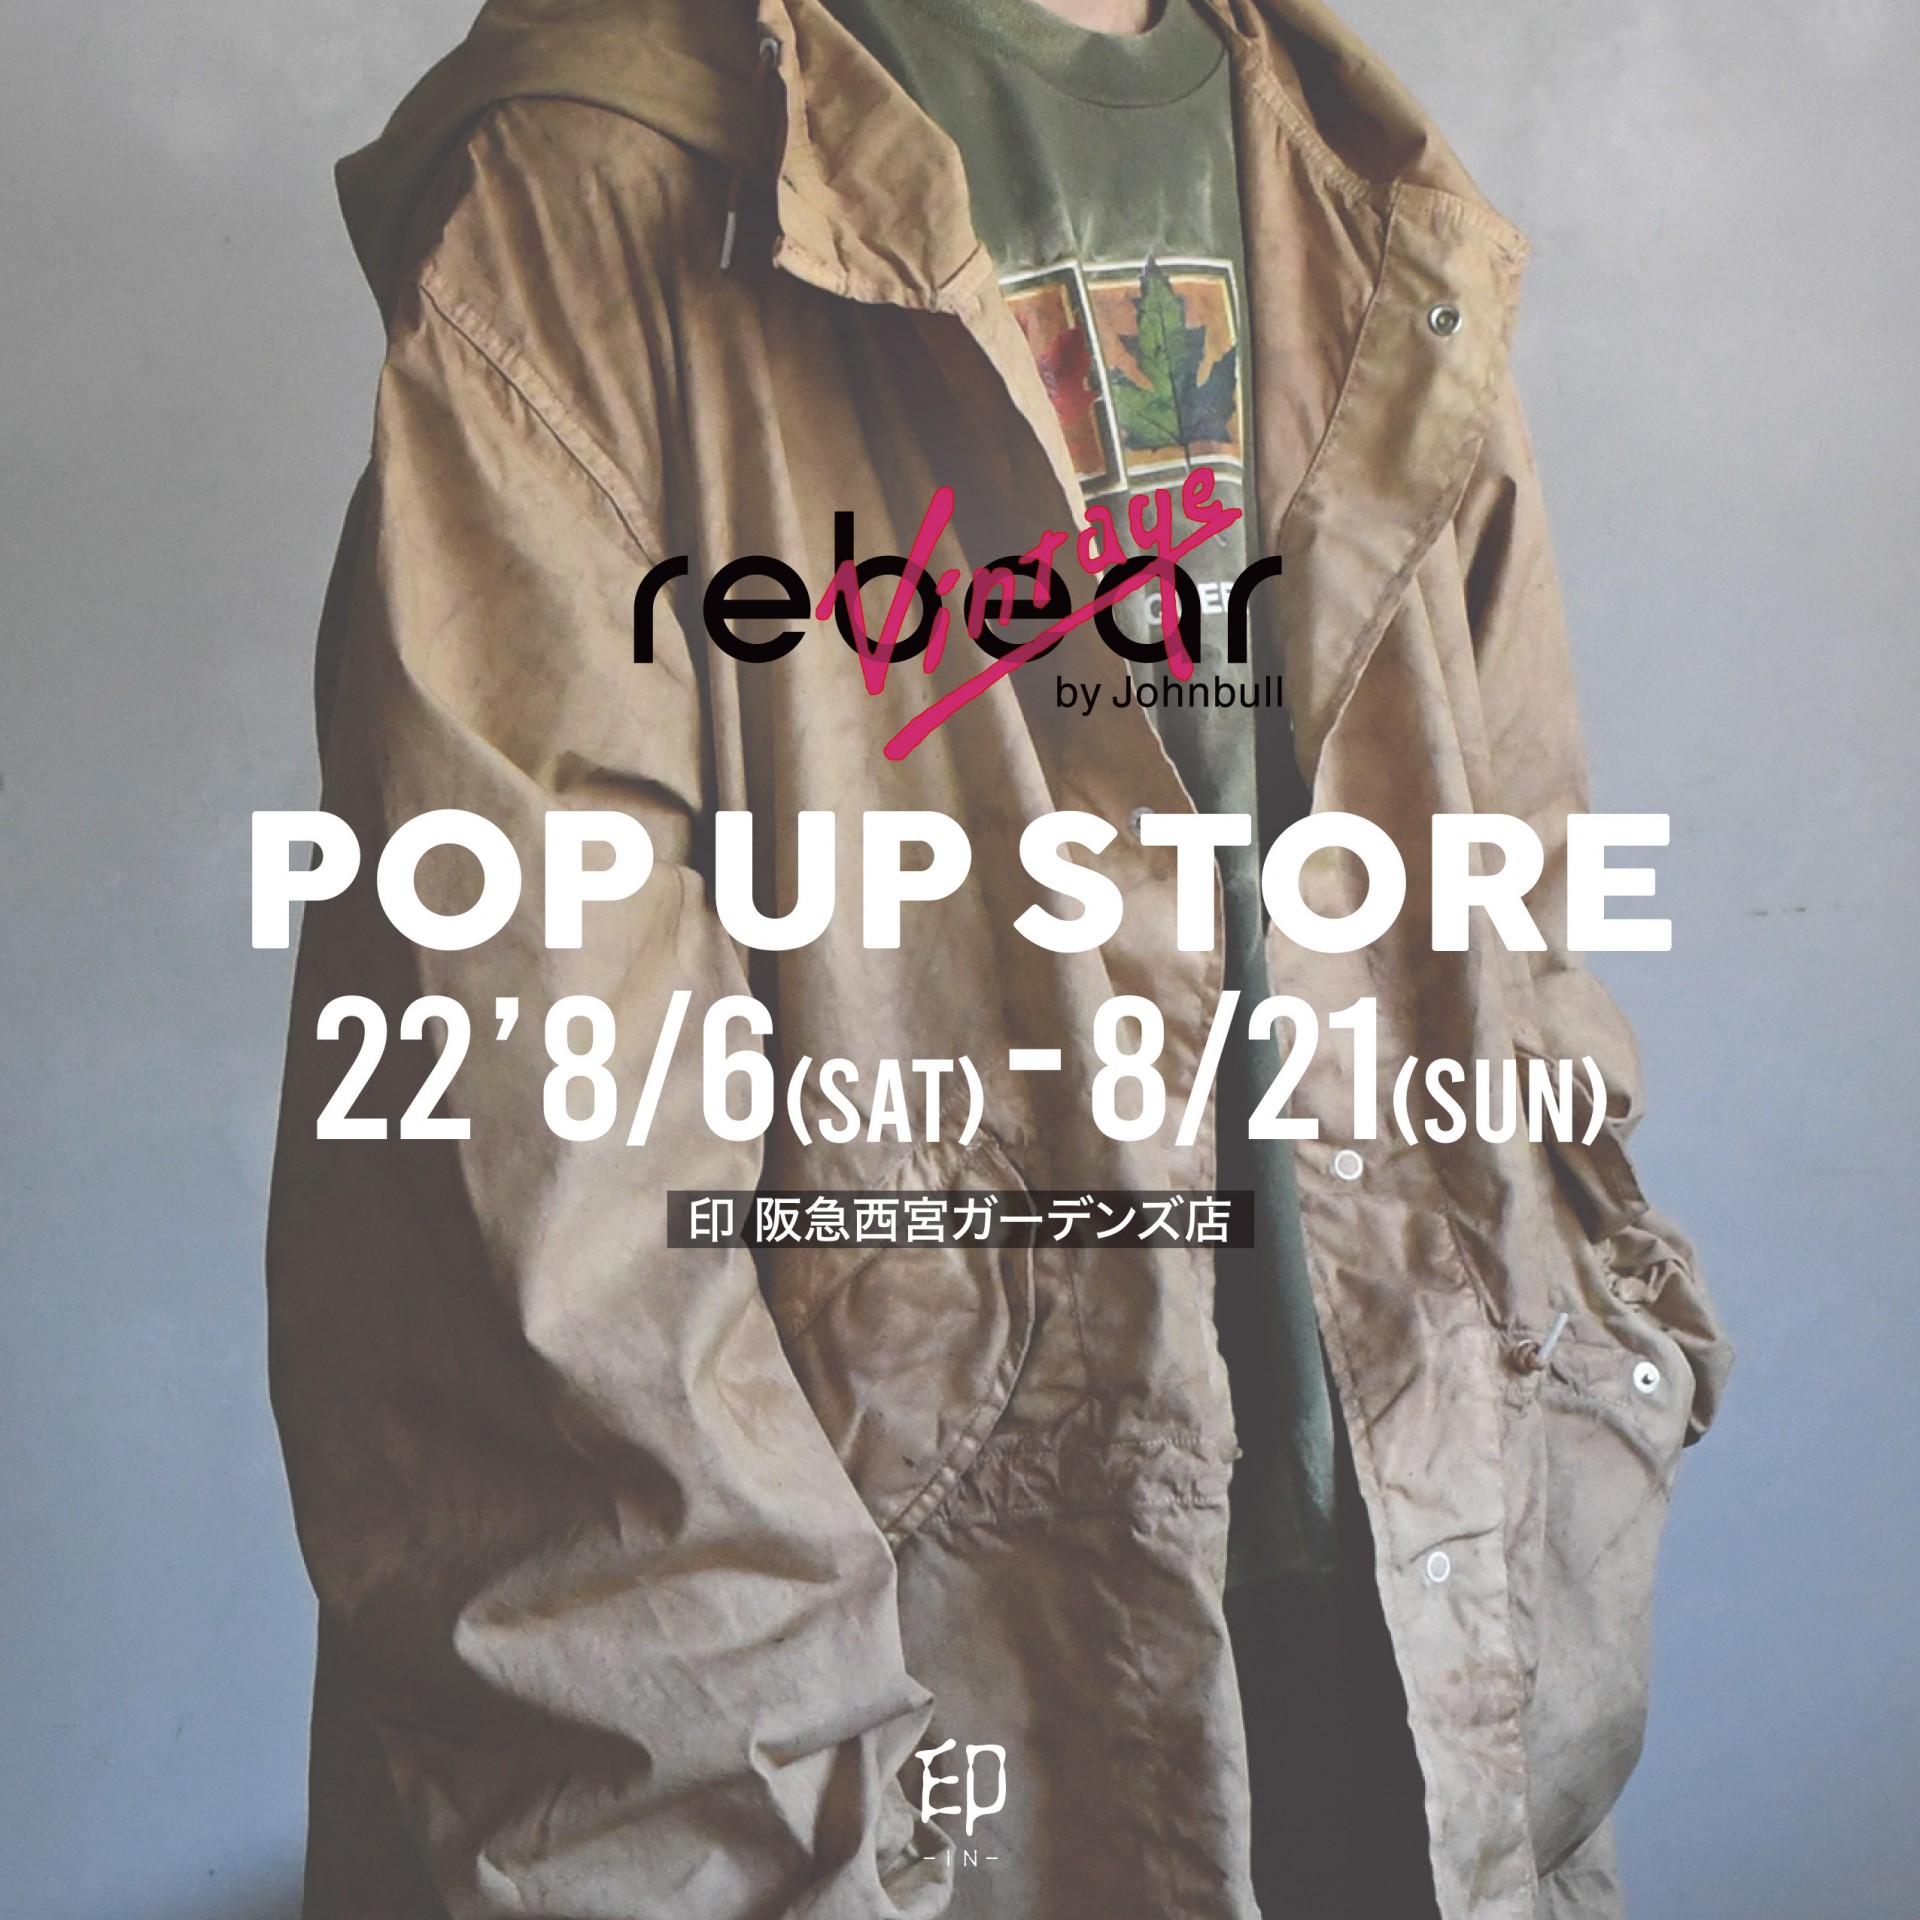 【rebear by johnbull POP UP STORE】8/6(sat)~8/21(sun)